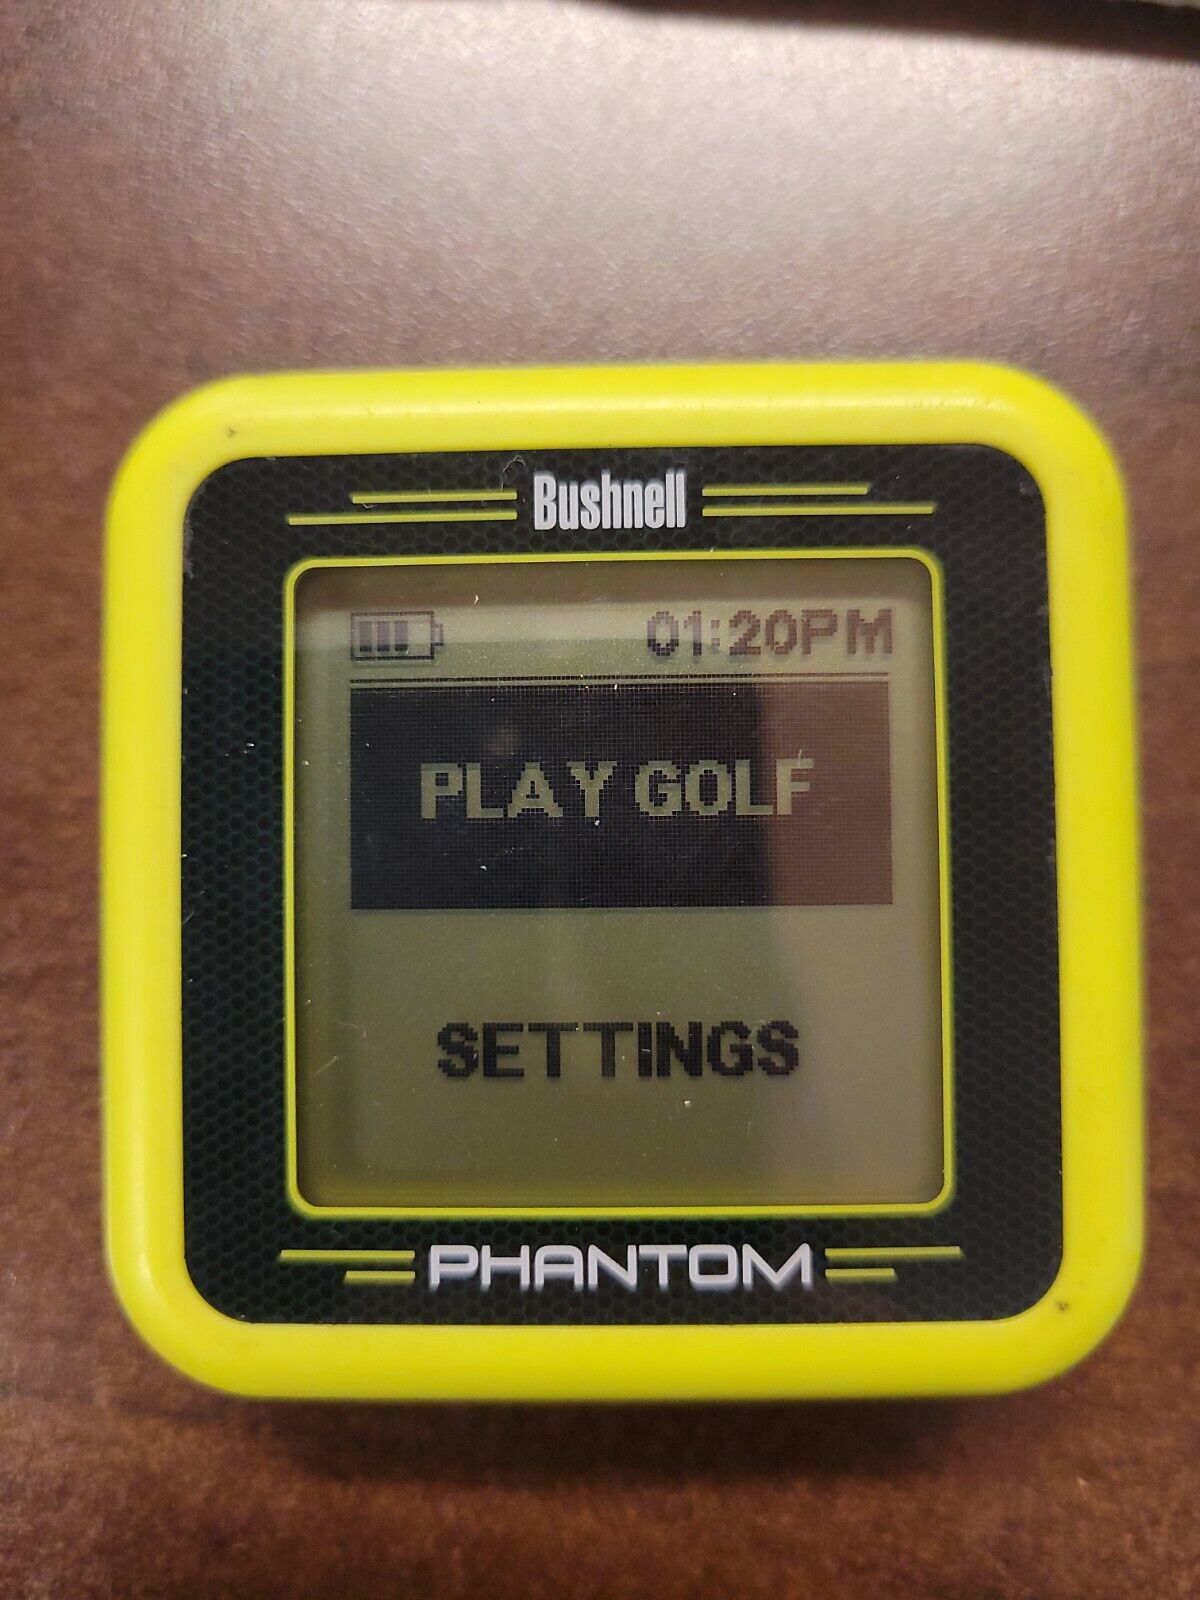 Bushnell Phantom 1 Golf GPS Rangefinder - Yellow / Green Good Condition 